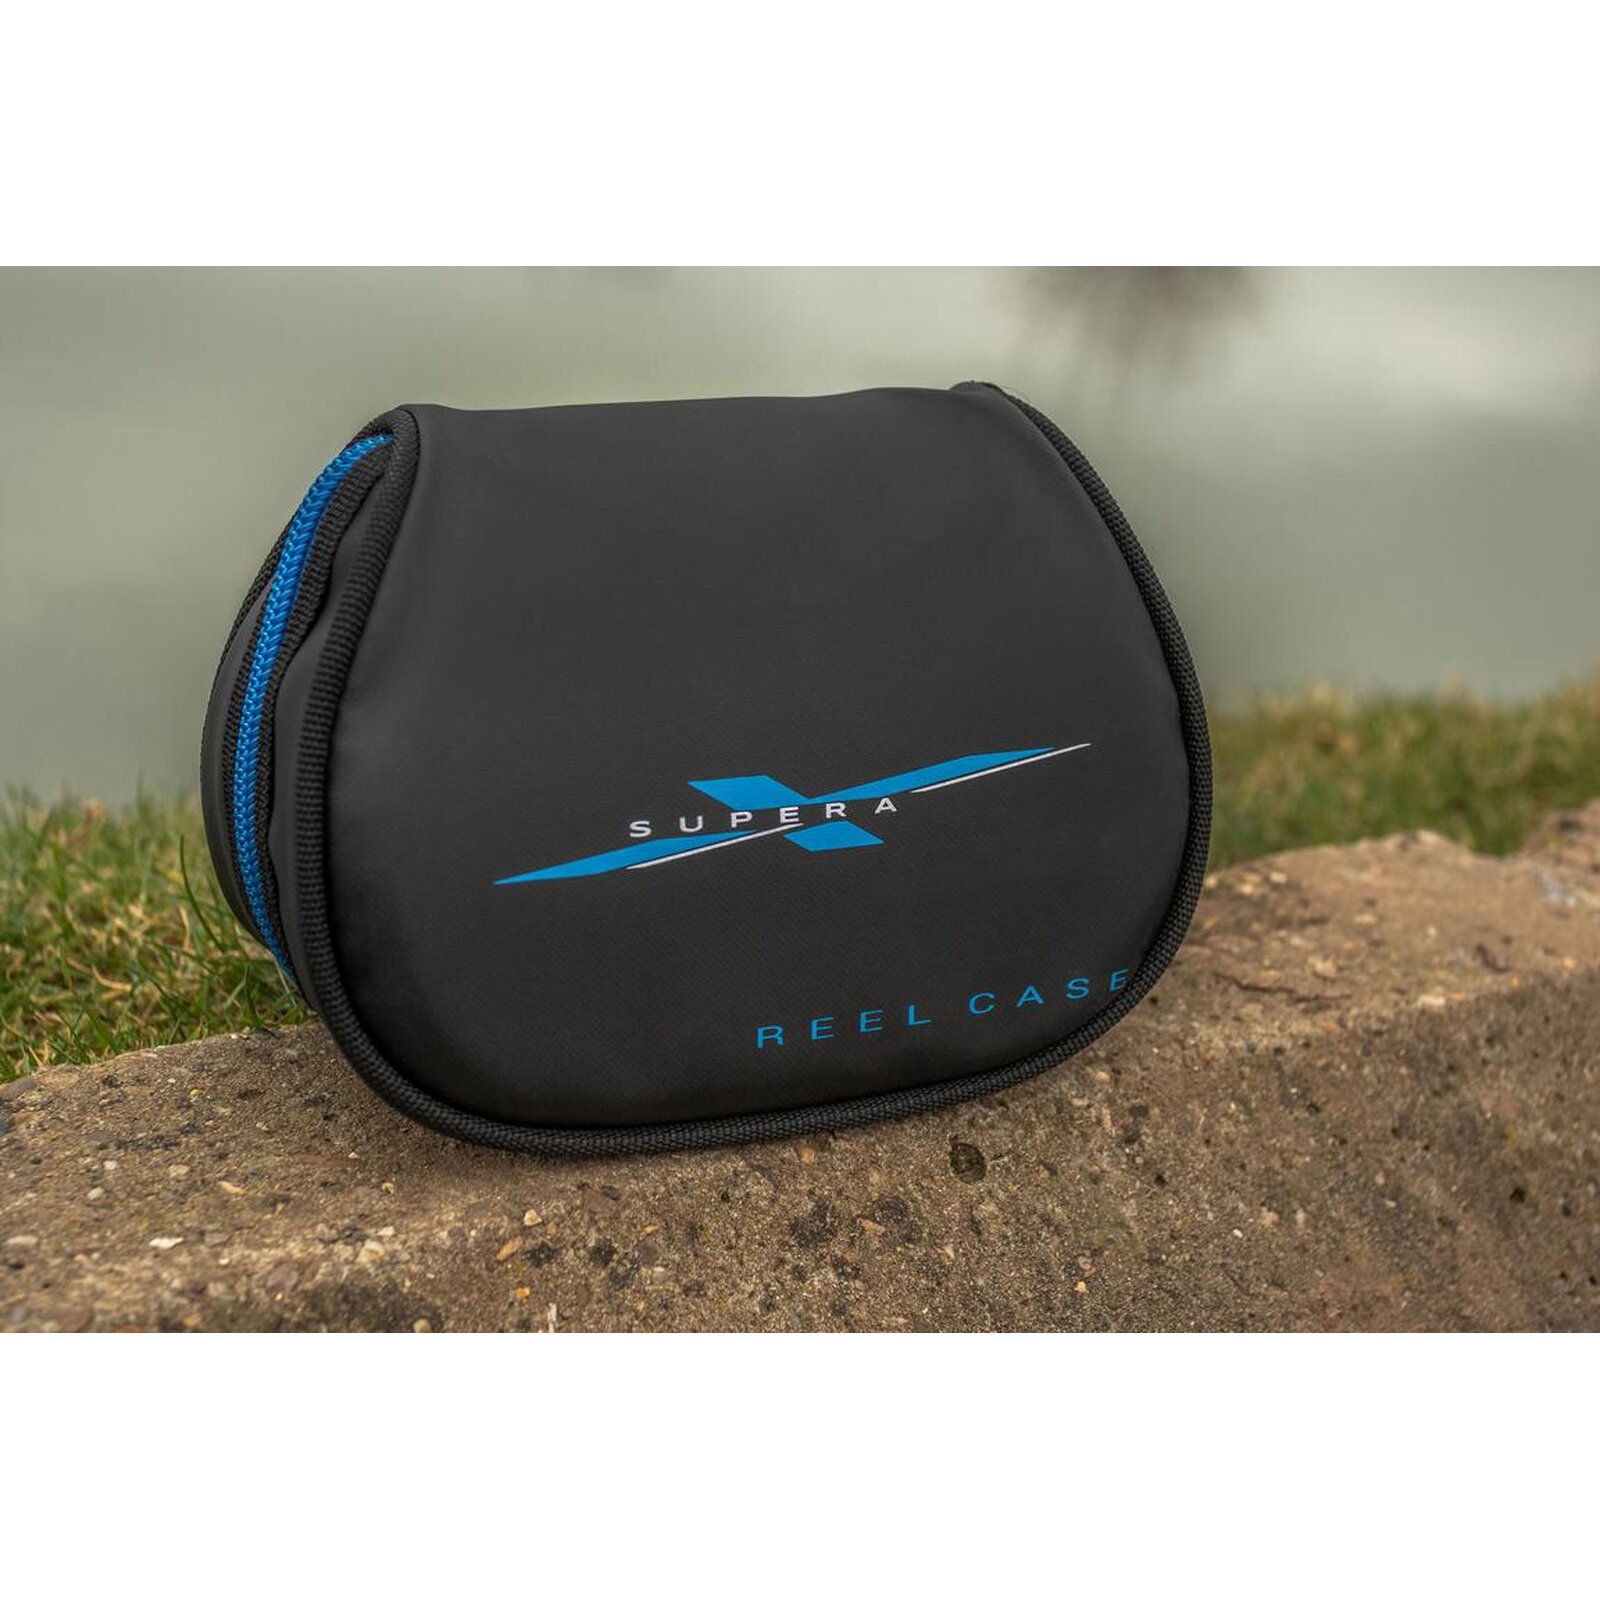 Preston Innovations Supera X Reel Bag